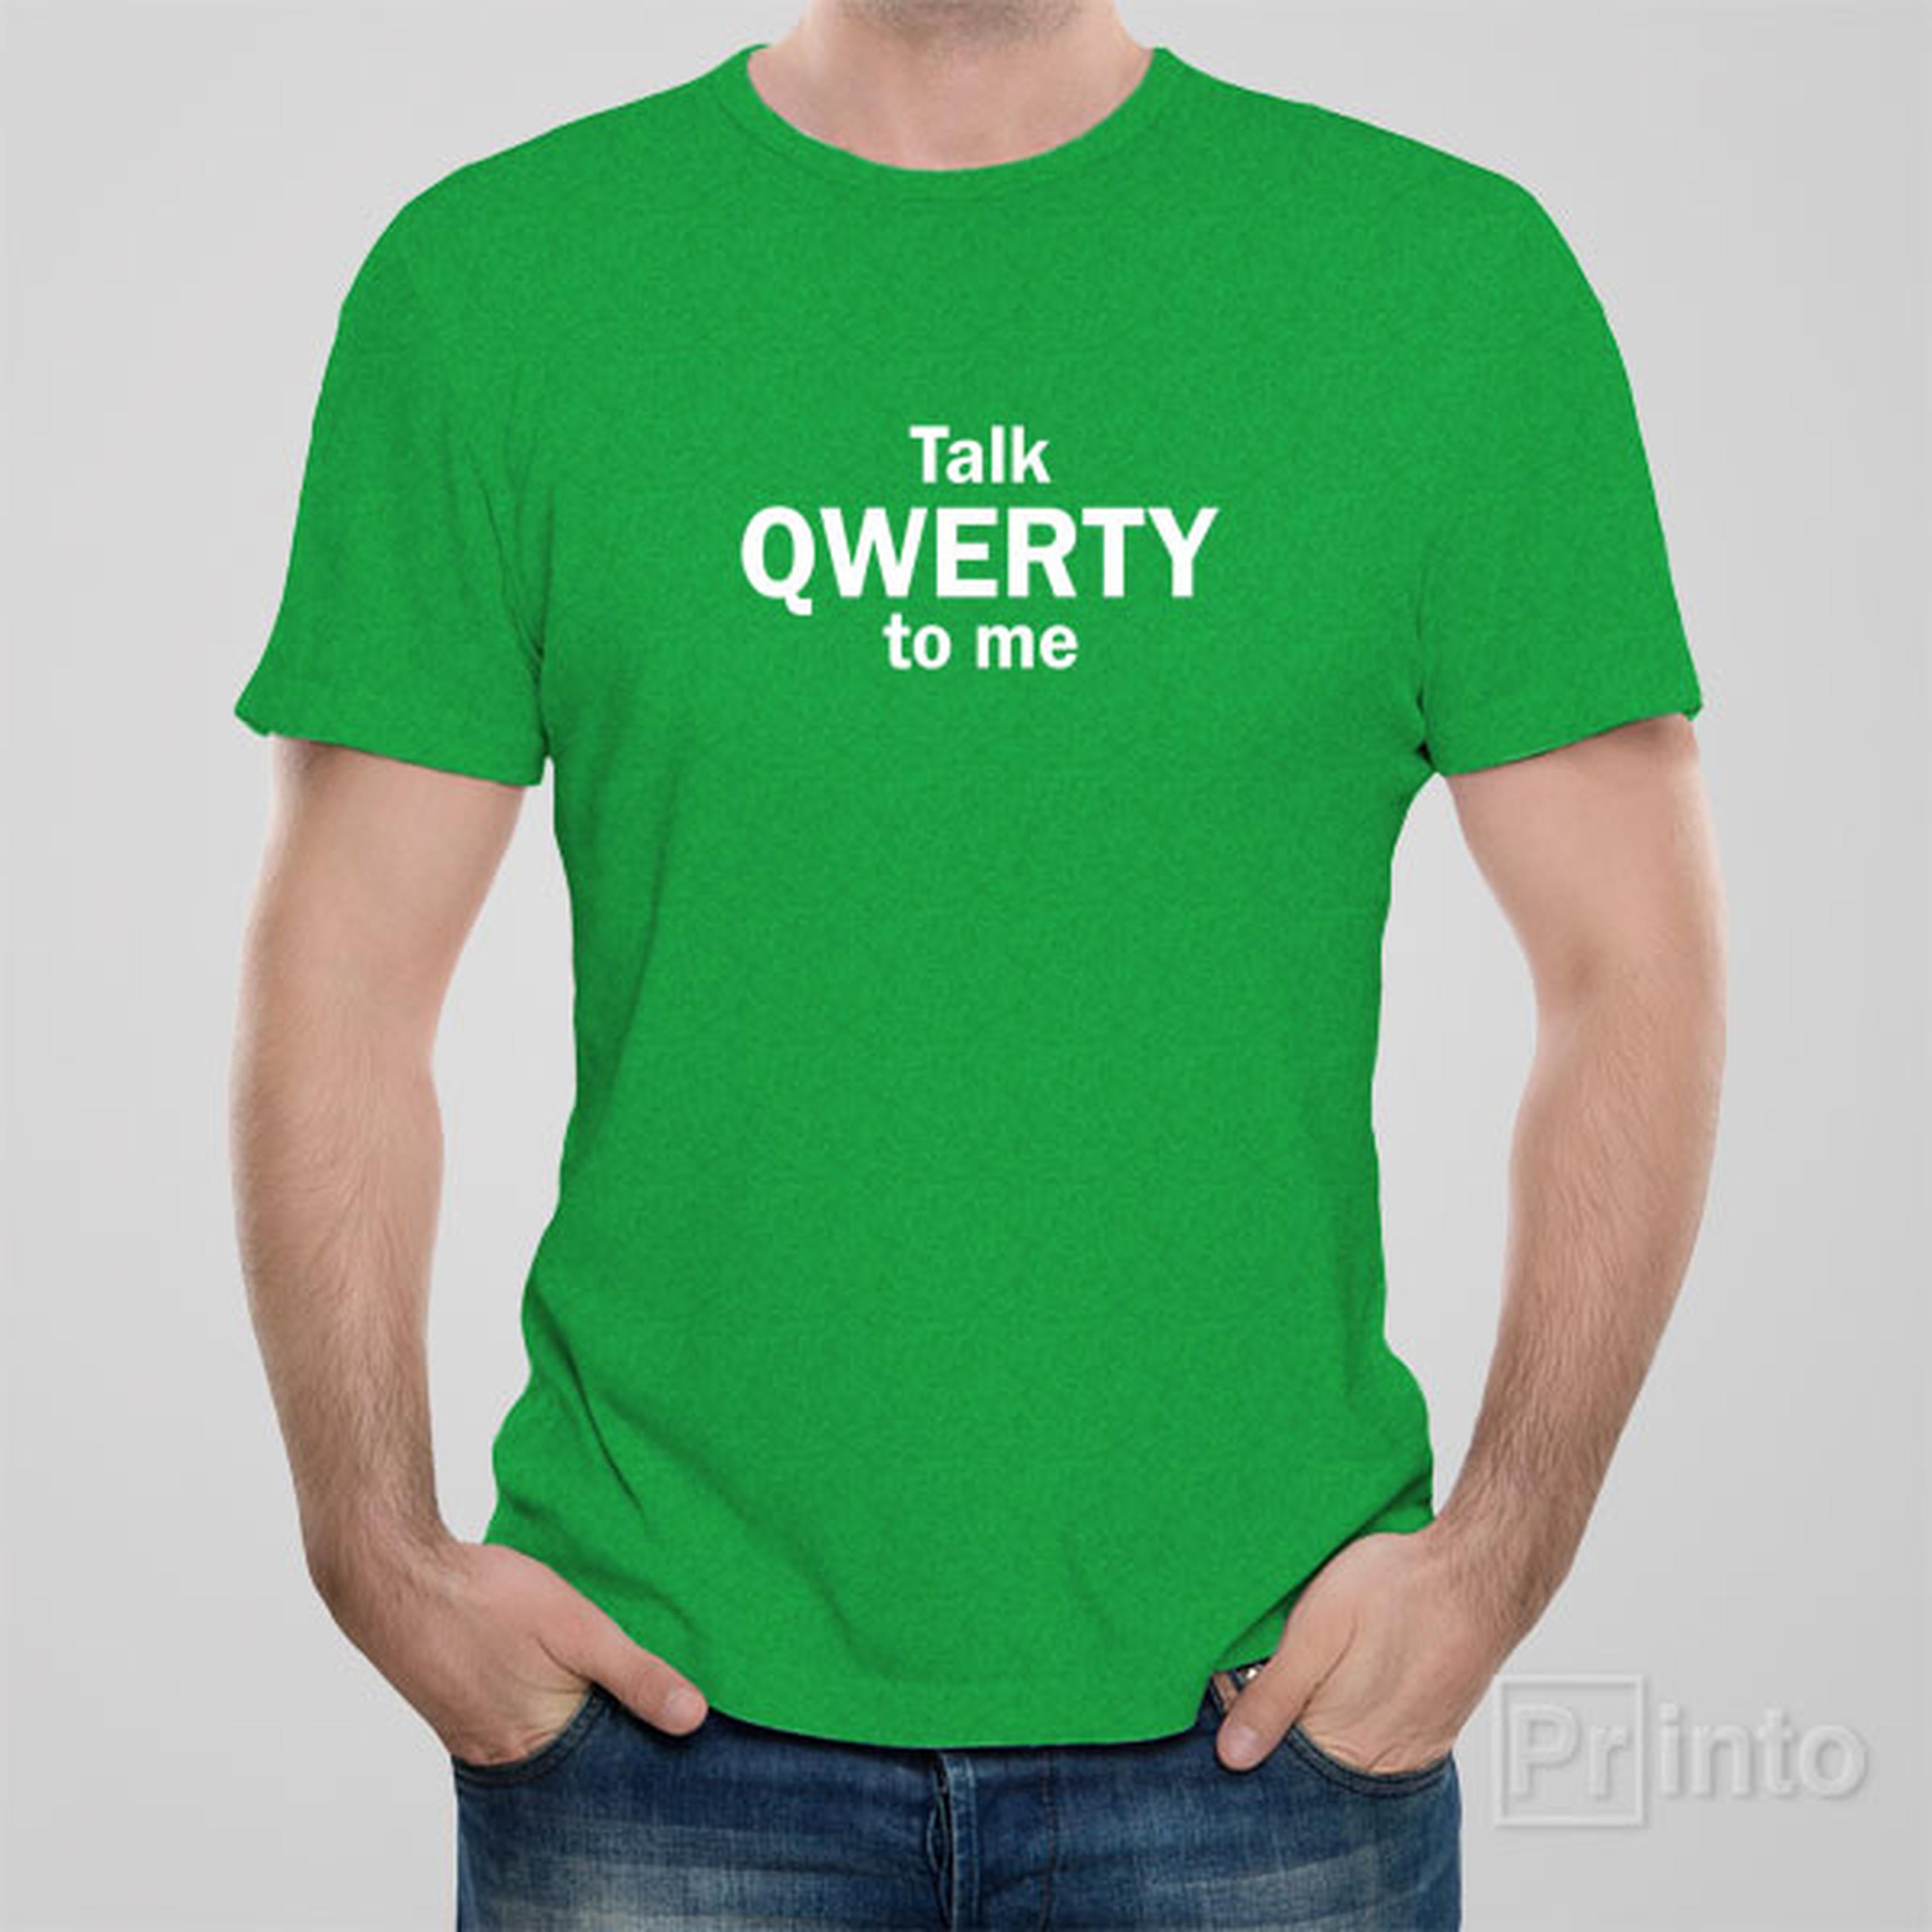 talk-qwerty-to-me-t-shirt